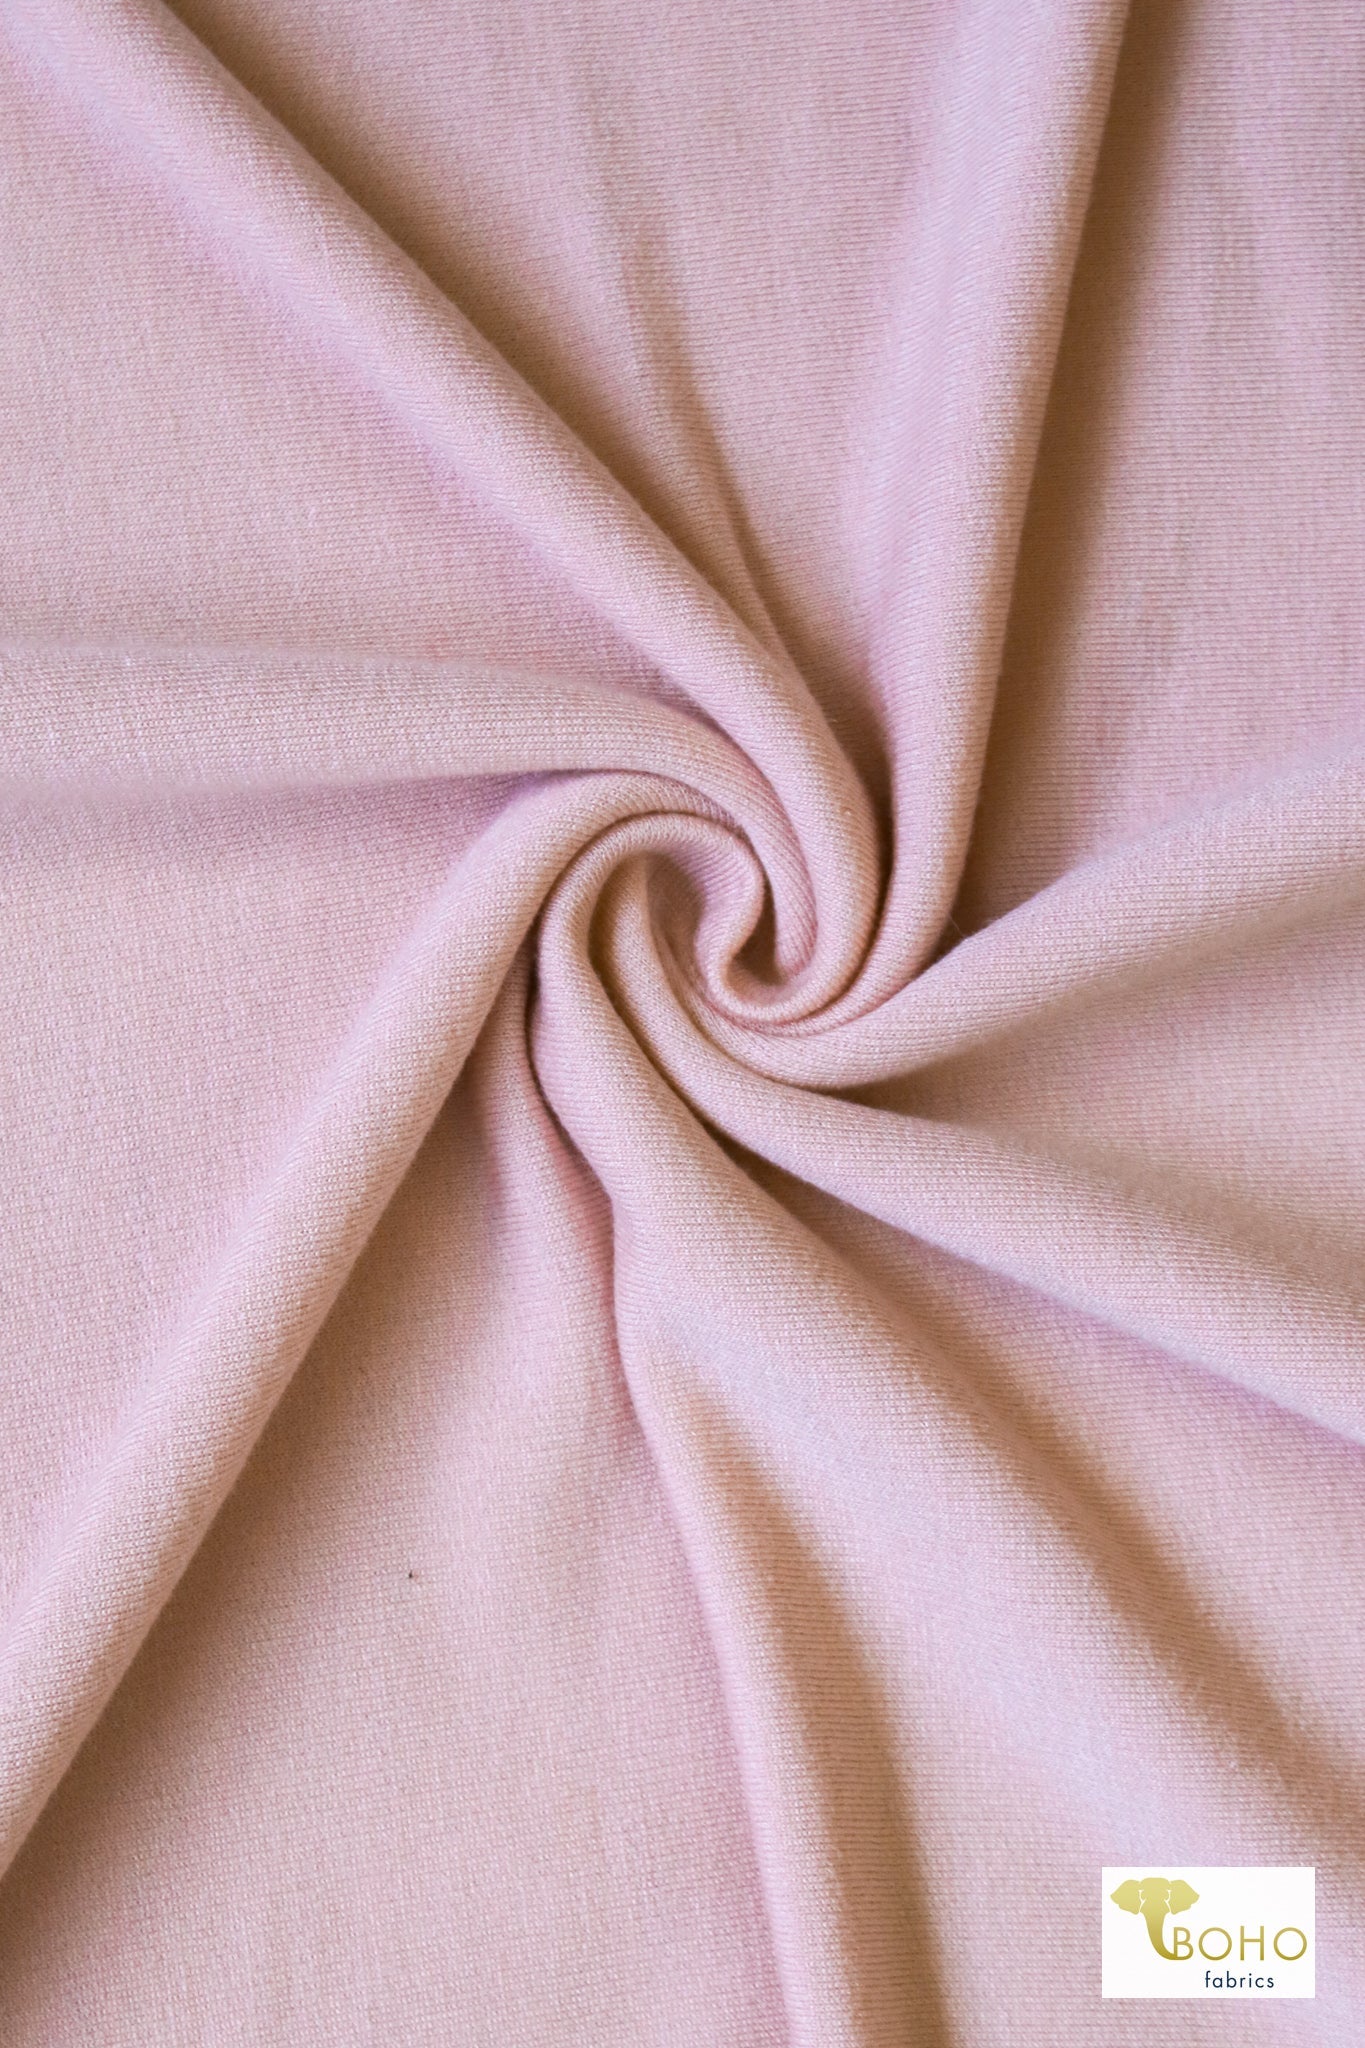 Pinkesque, French Terry Solid Knit - Boho Fabrics